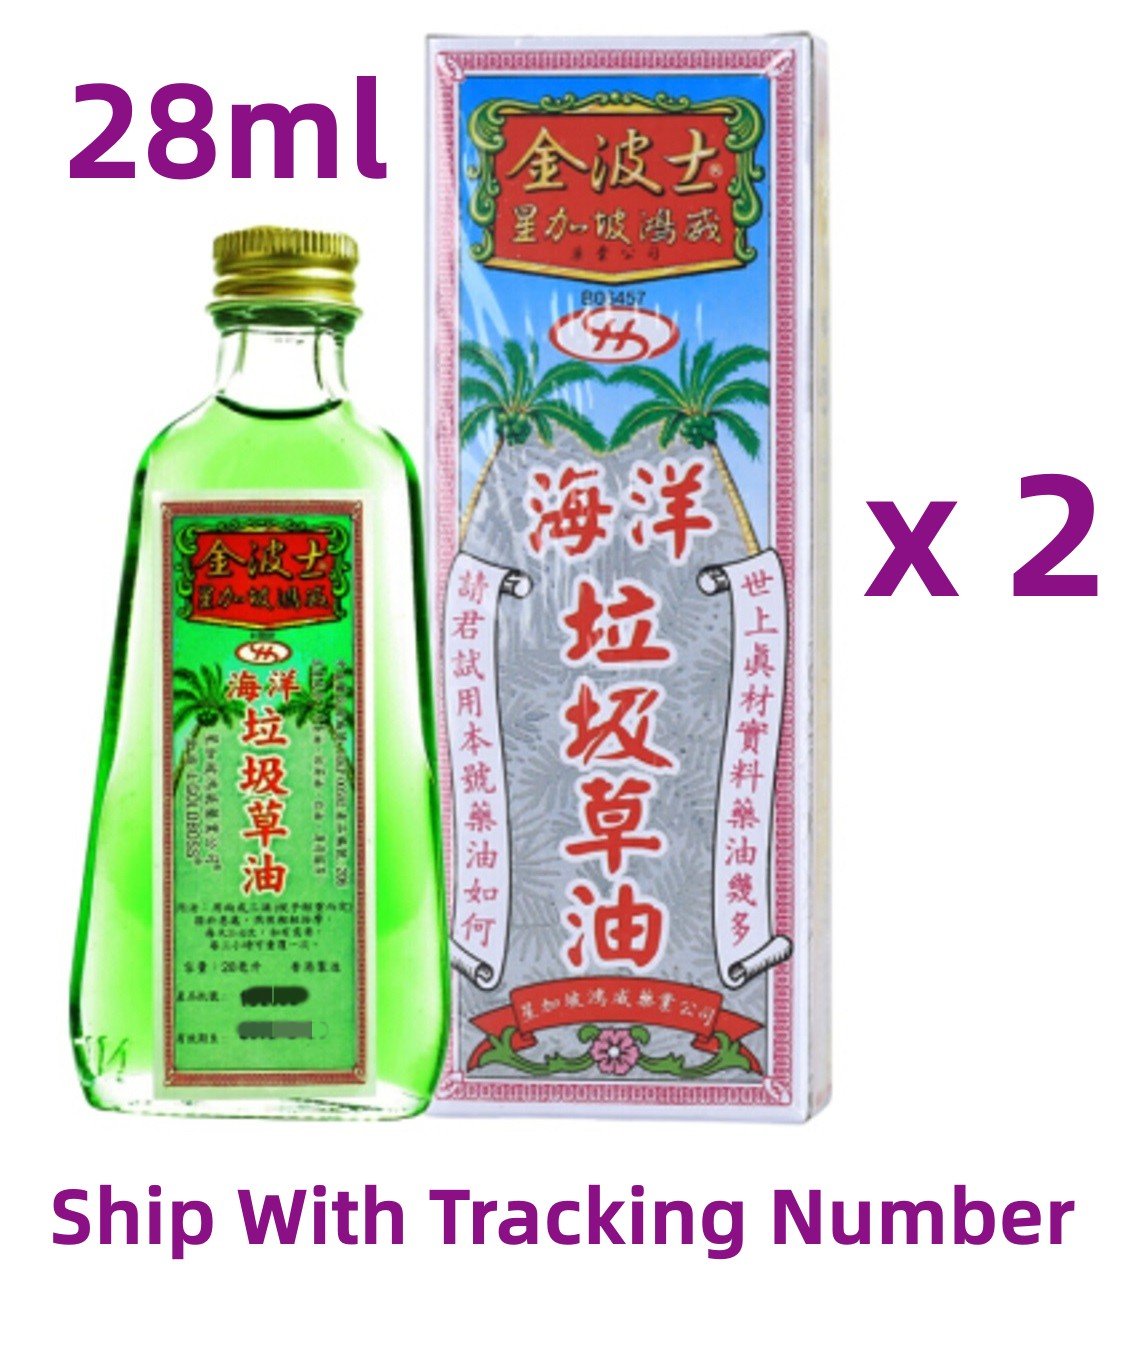 GoldBoss Chinese Medicated Wood Lock Massage Oil 28ml x 2 Bottles